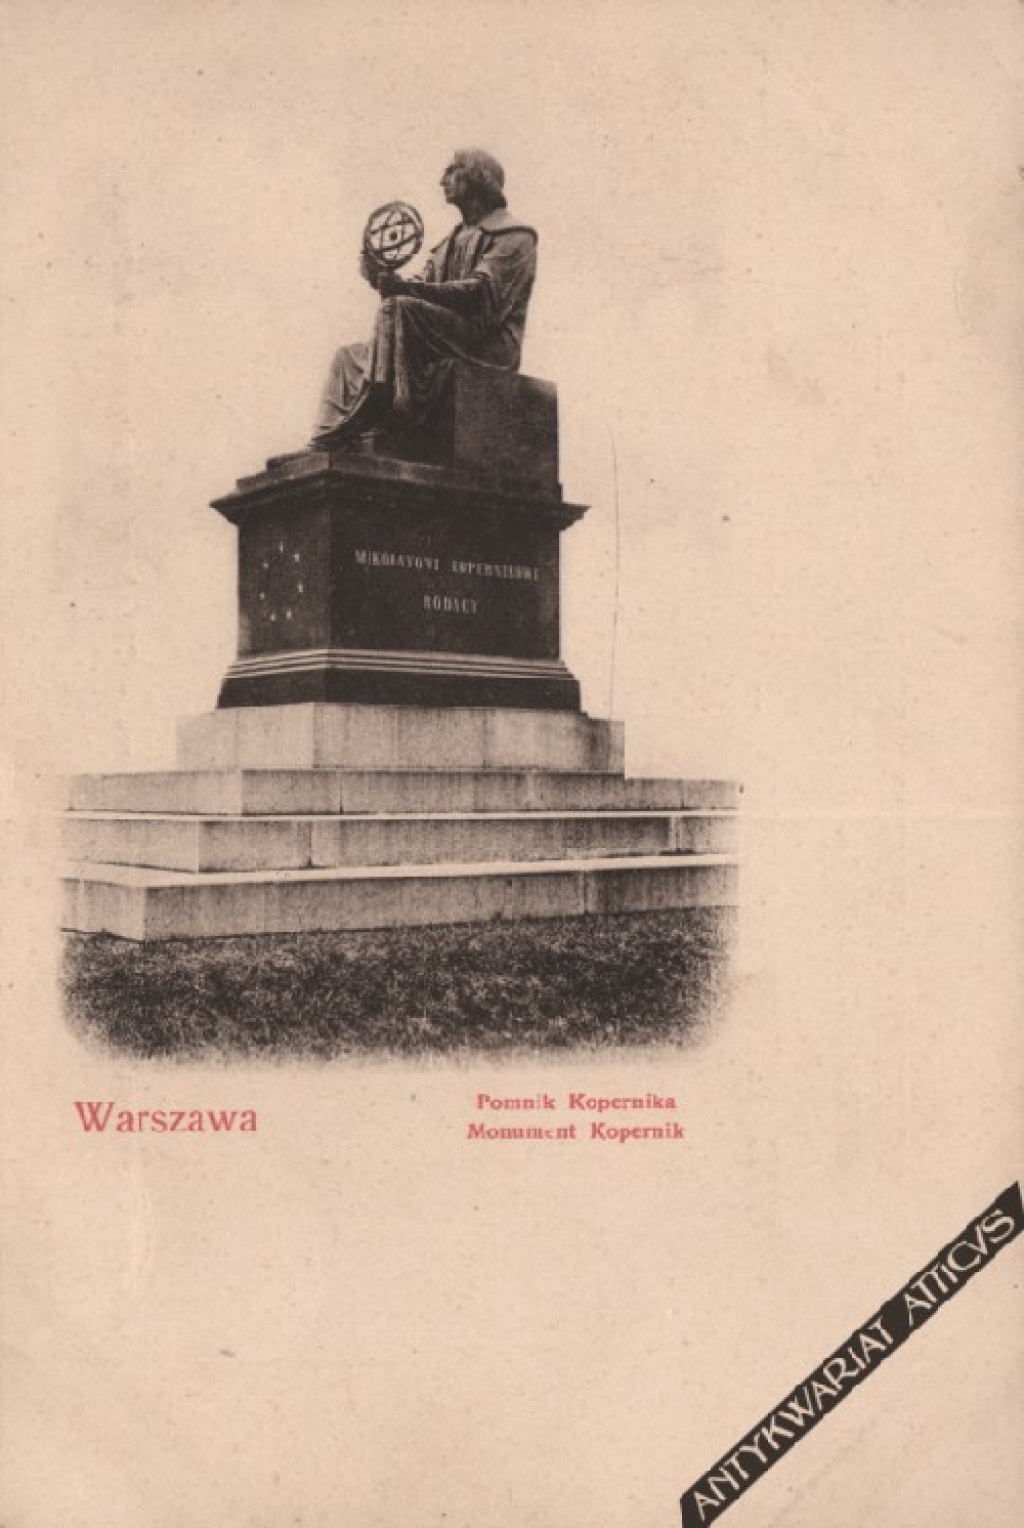 [pocztówka, ok. 1900] Warszawa. Pomnik Kopernika. Monument Kopernik